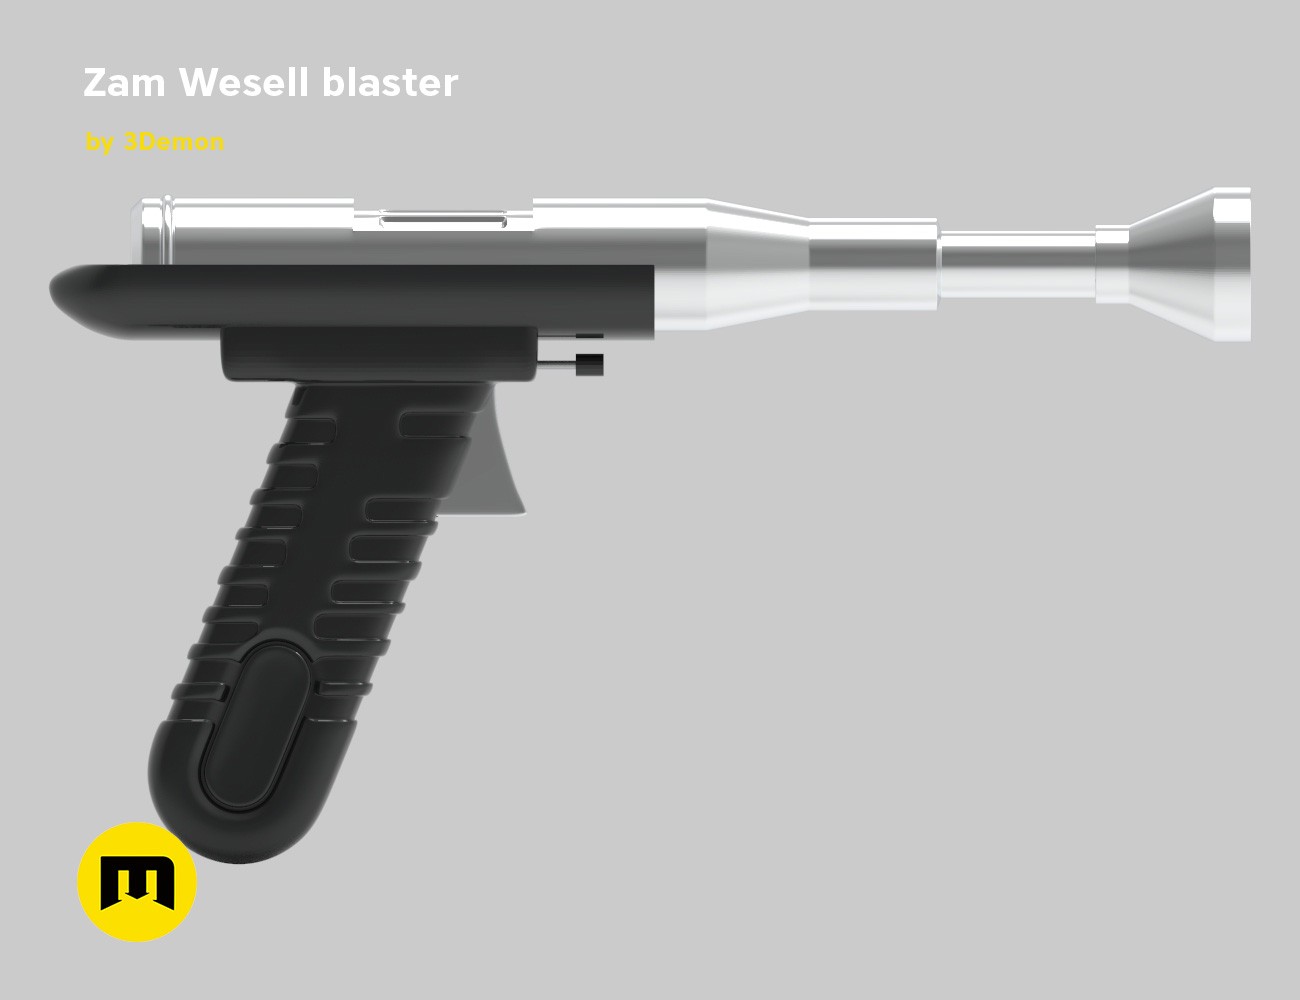 Zam Wesell blaster